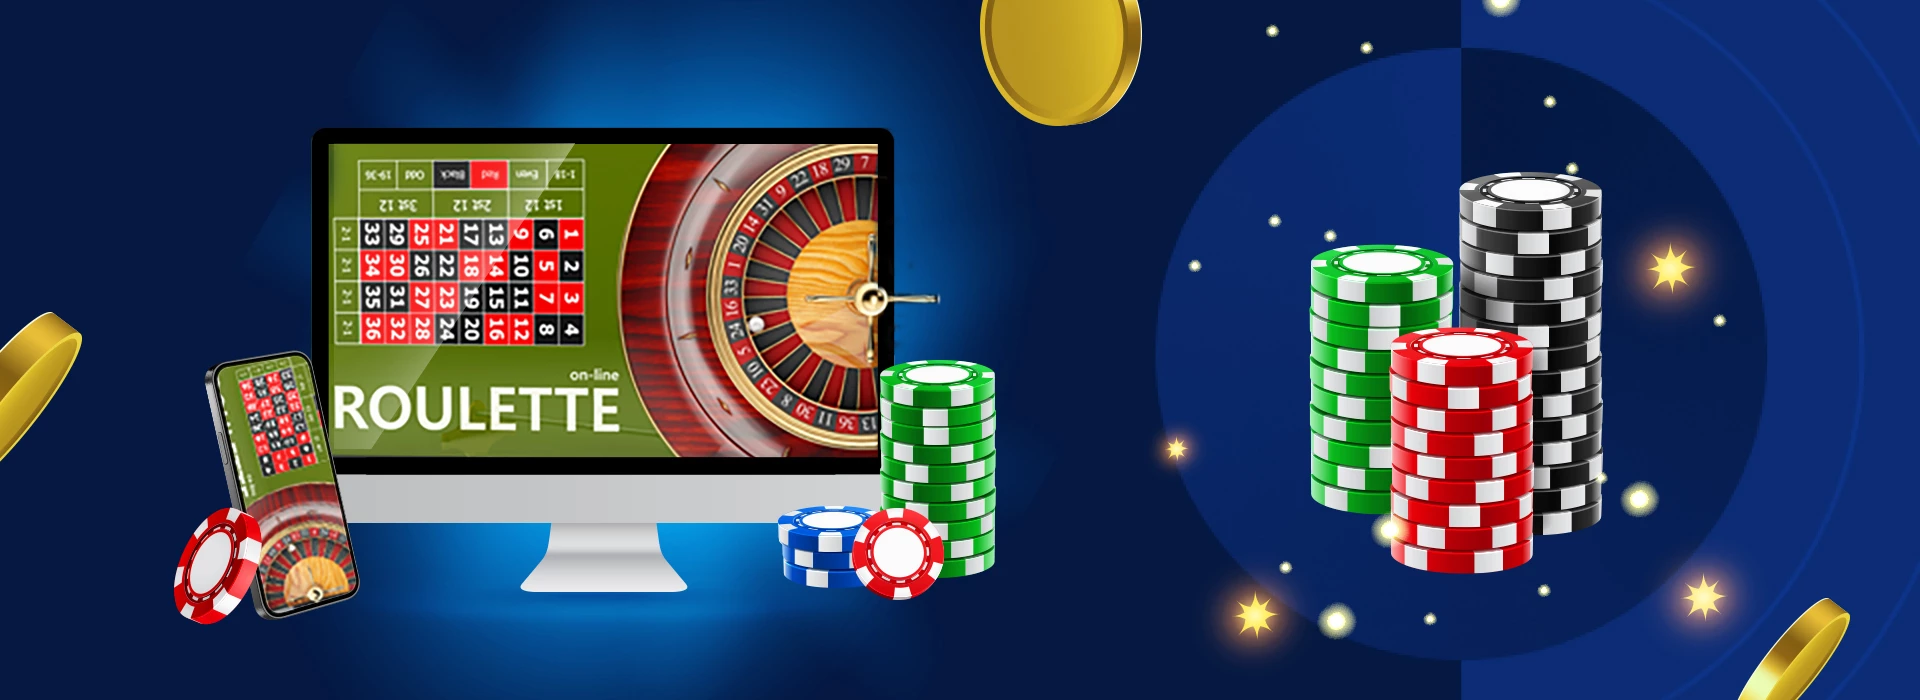 Live roulette spellen content image design image CasinoGenie